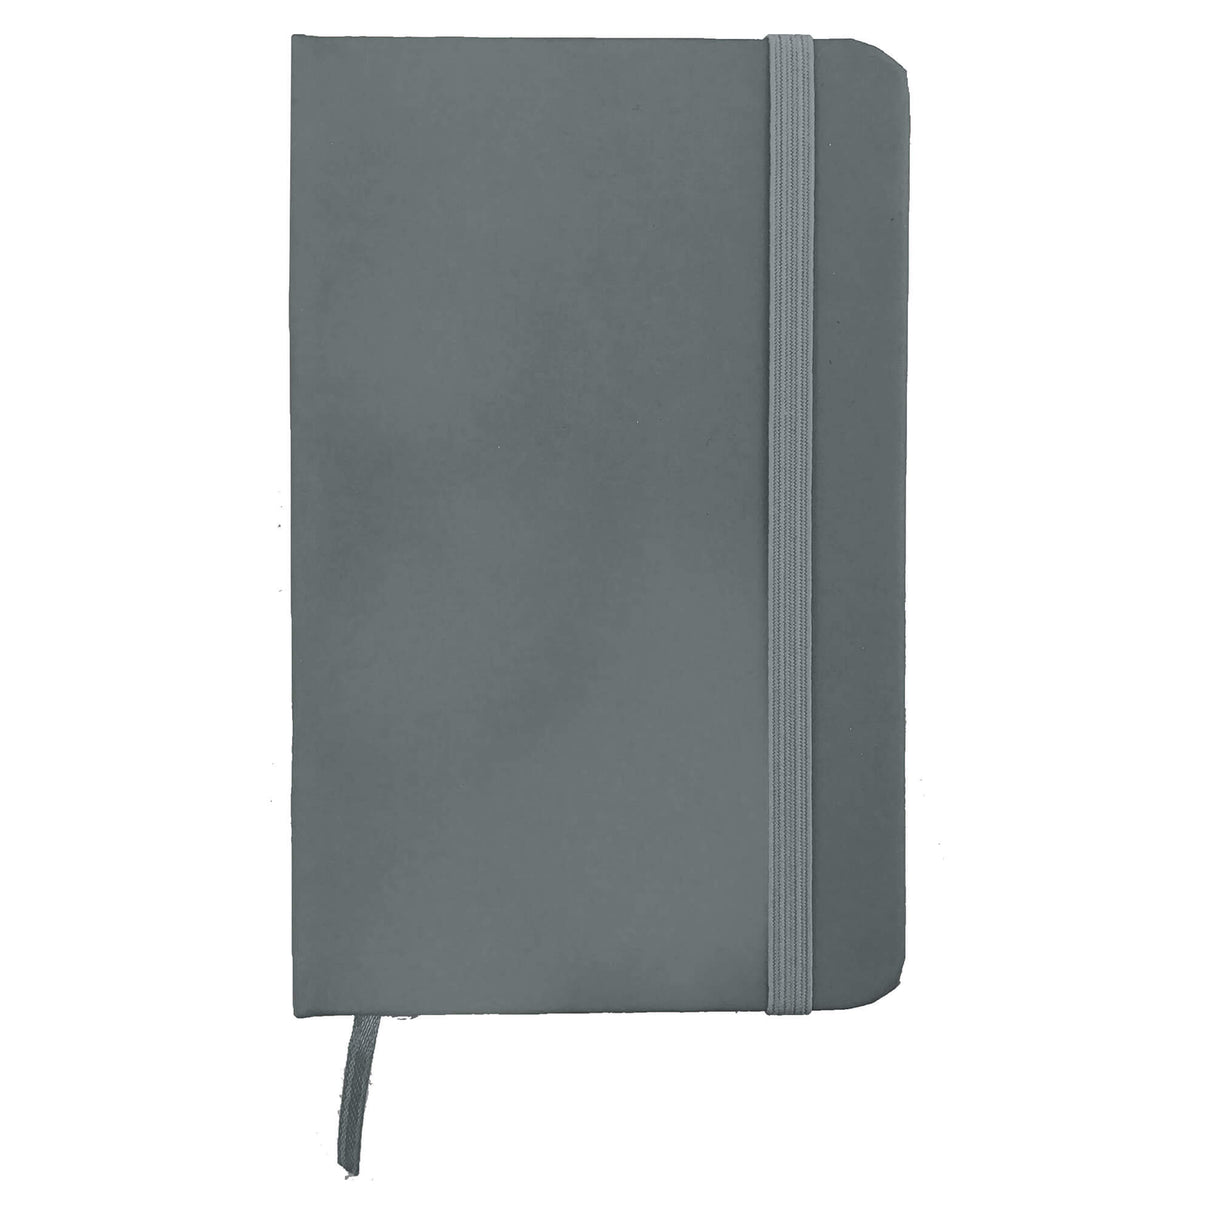 Handy PU Notebook - Printed